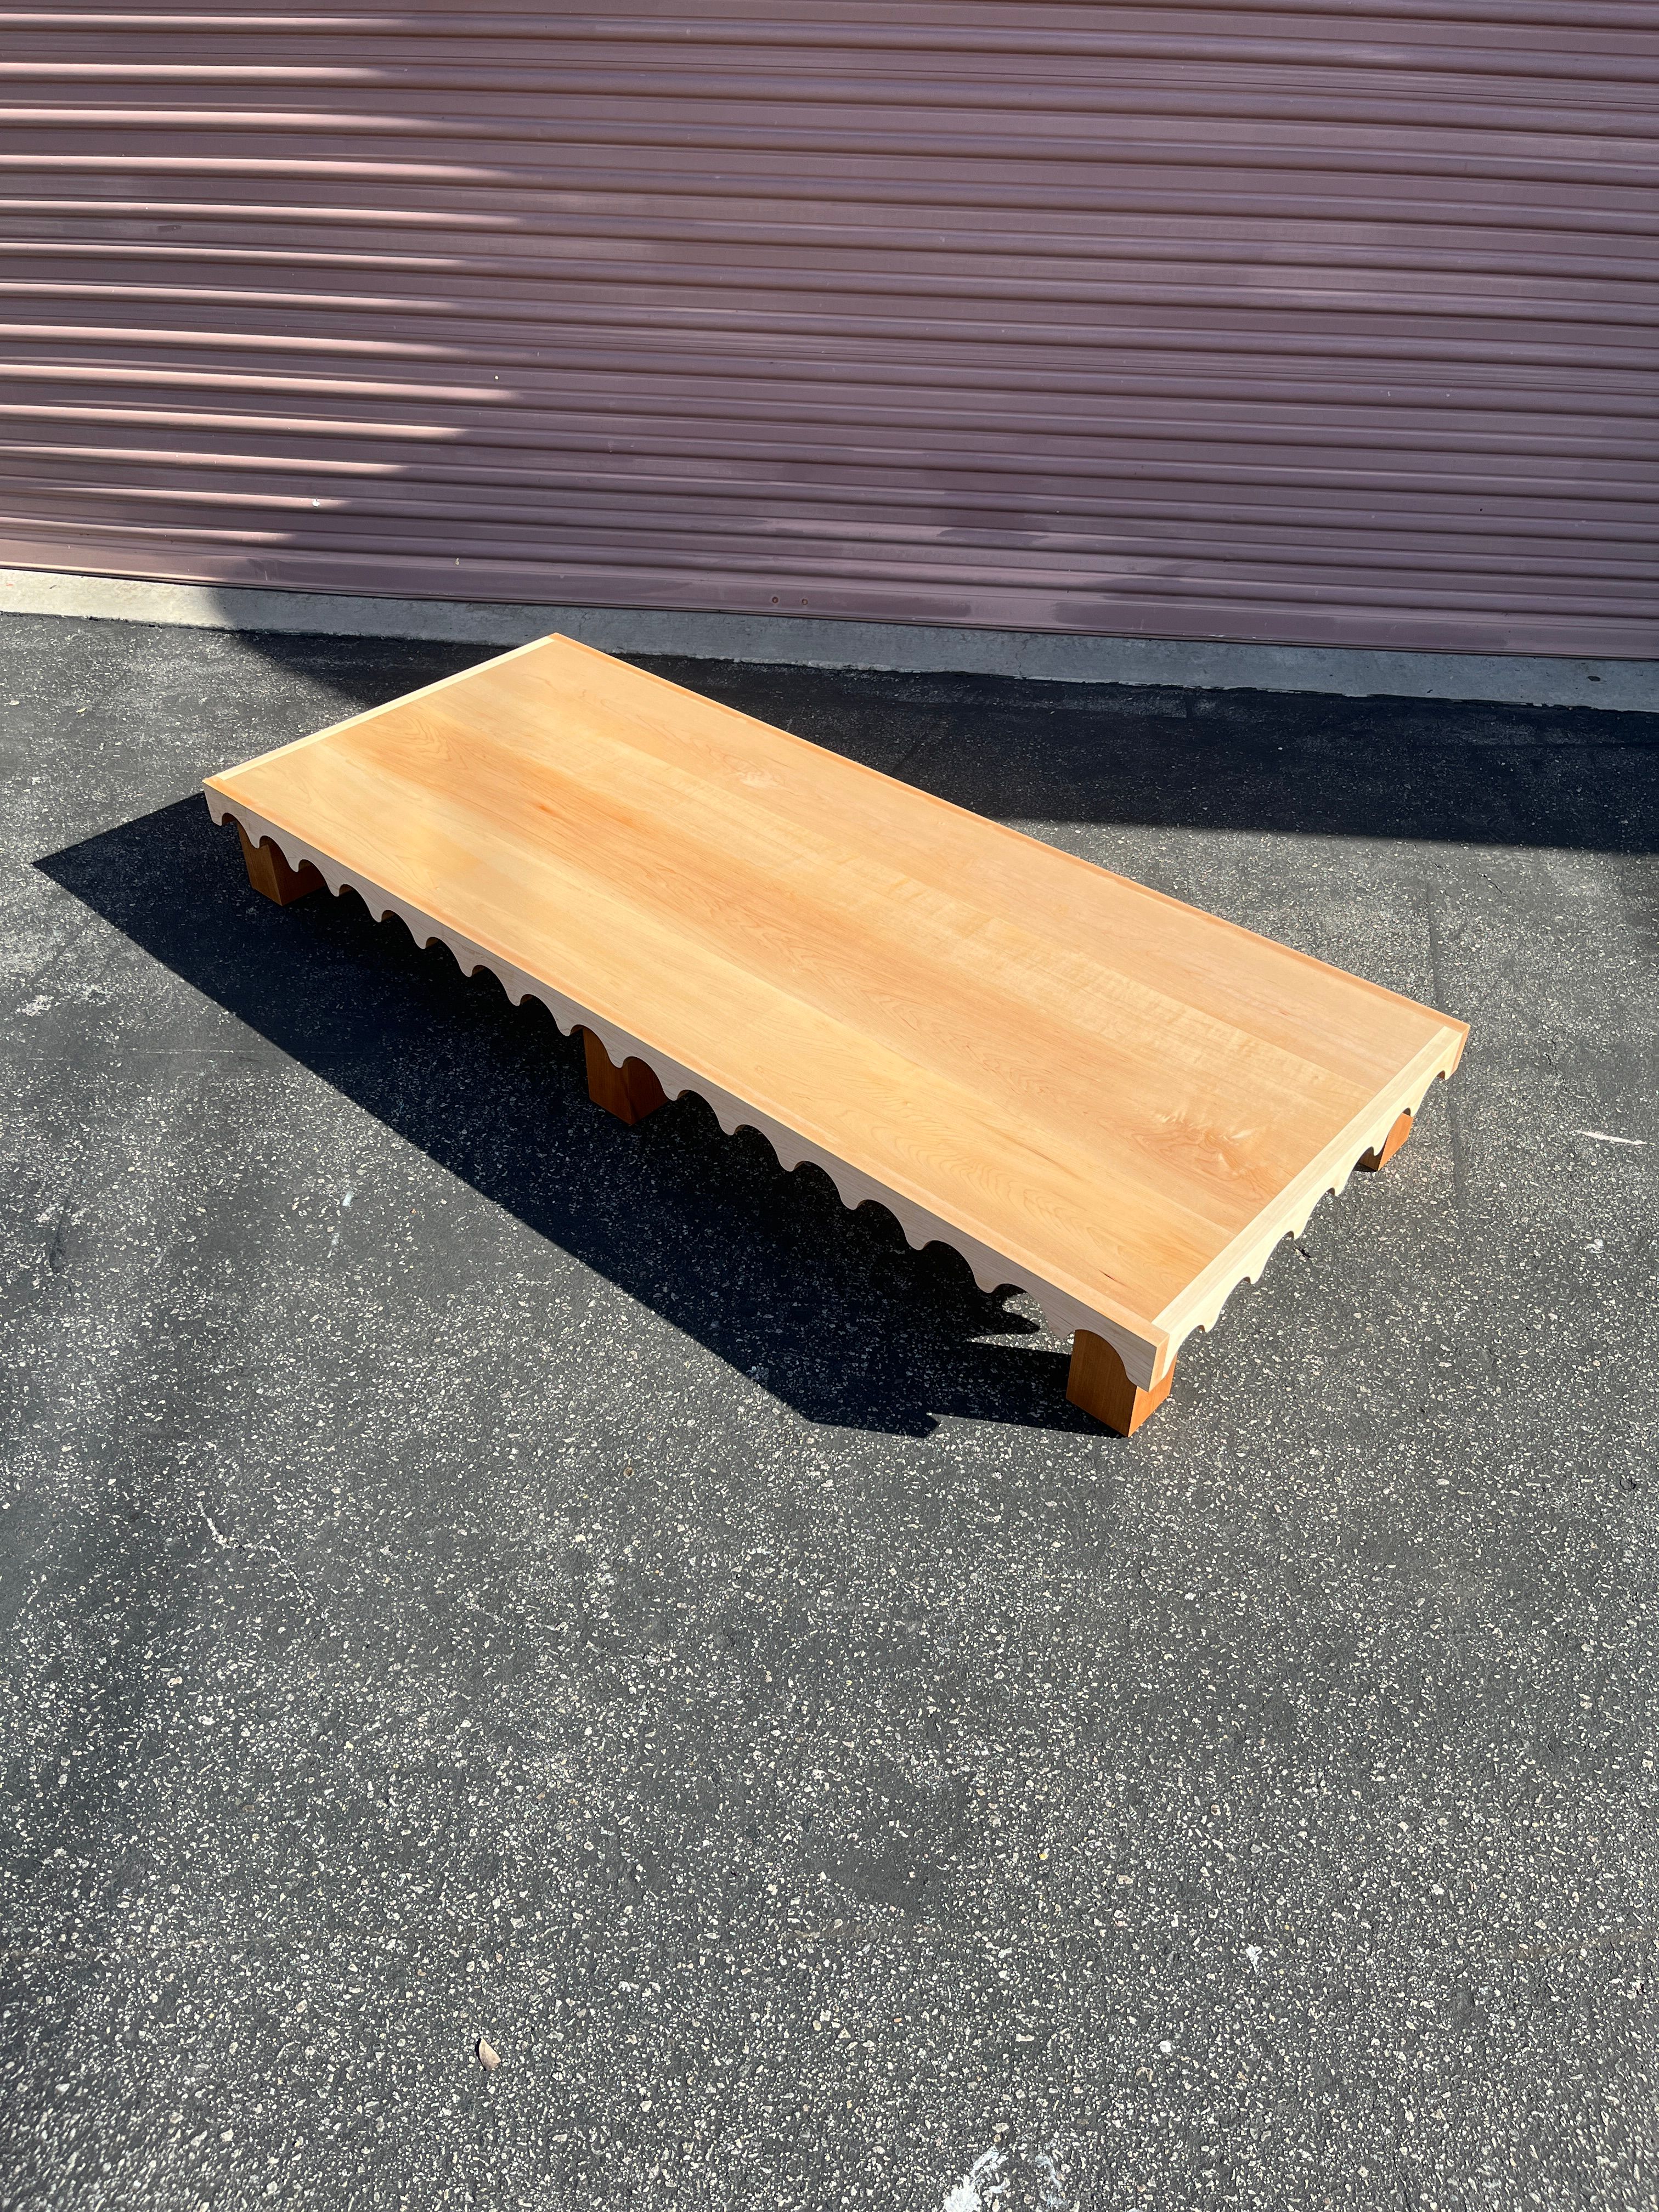  Scallop Benches - Laun Studio product image 6